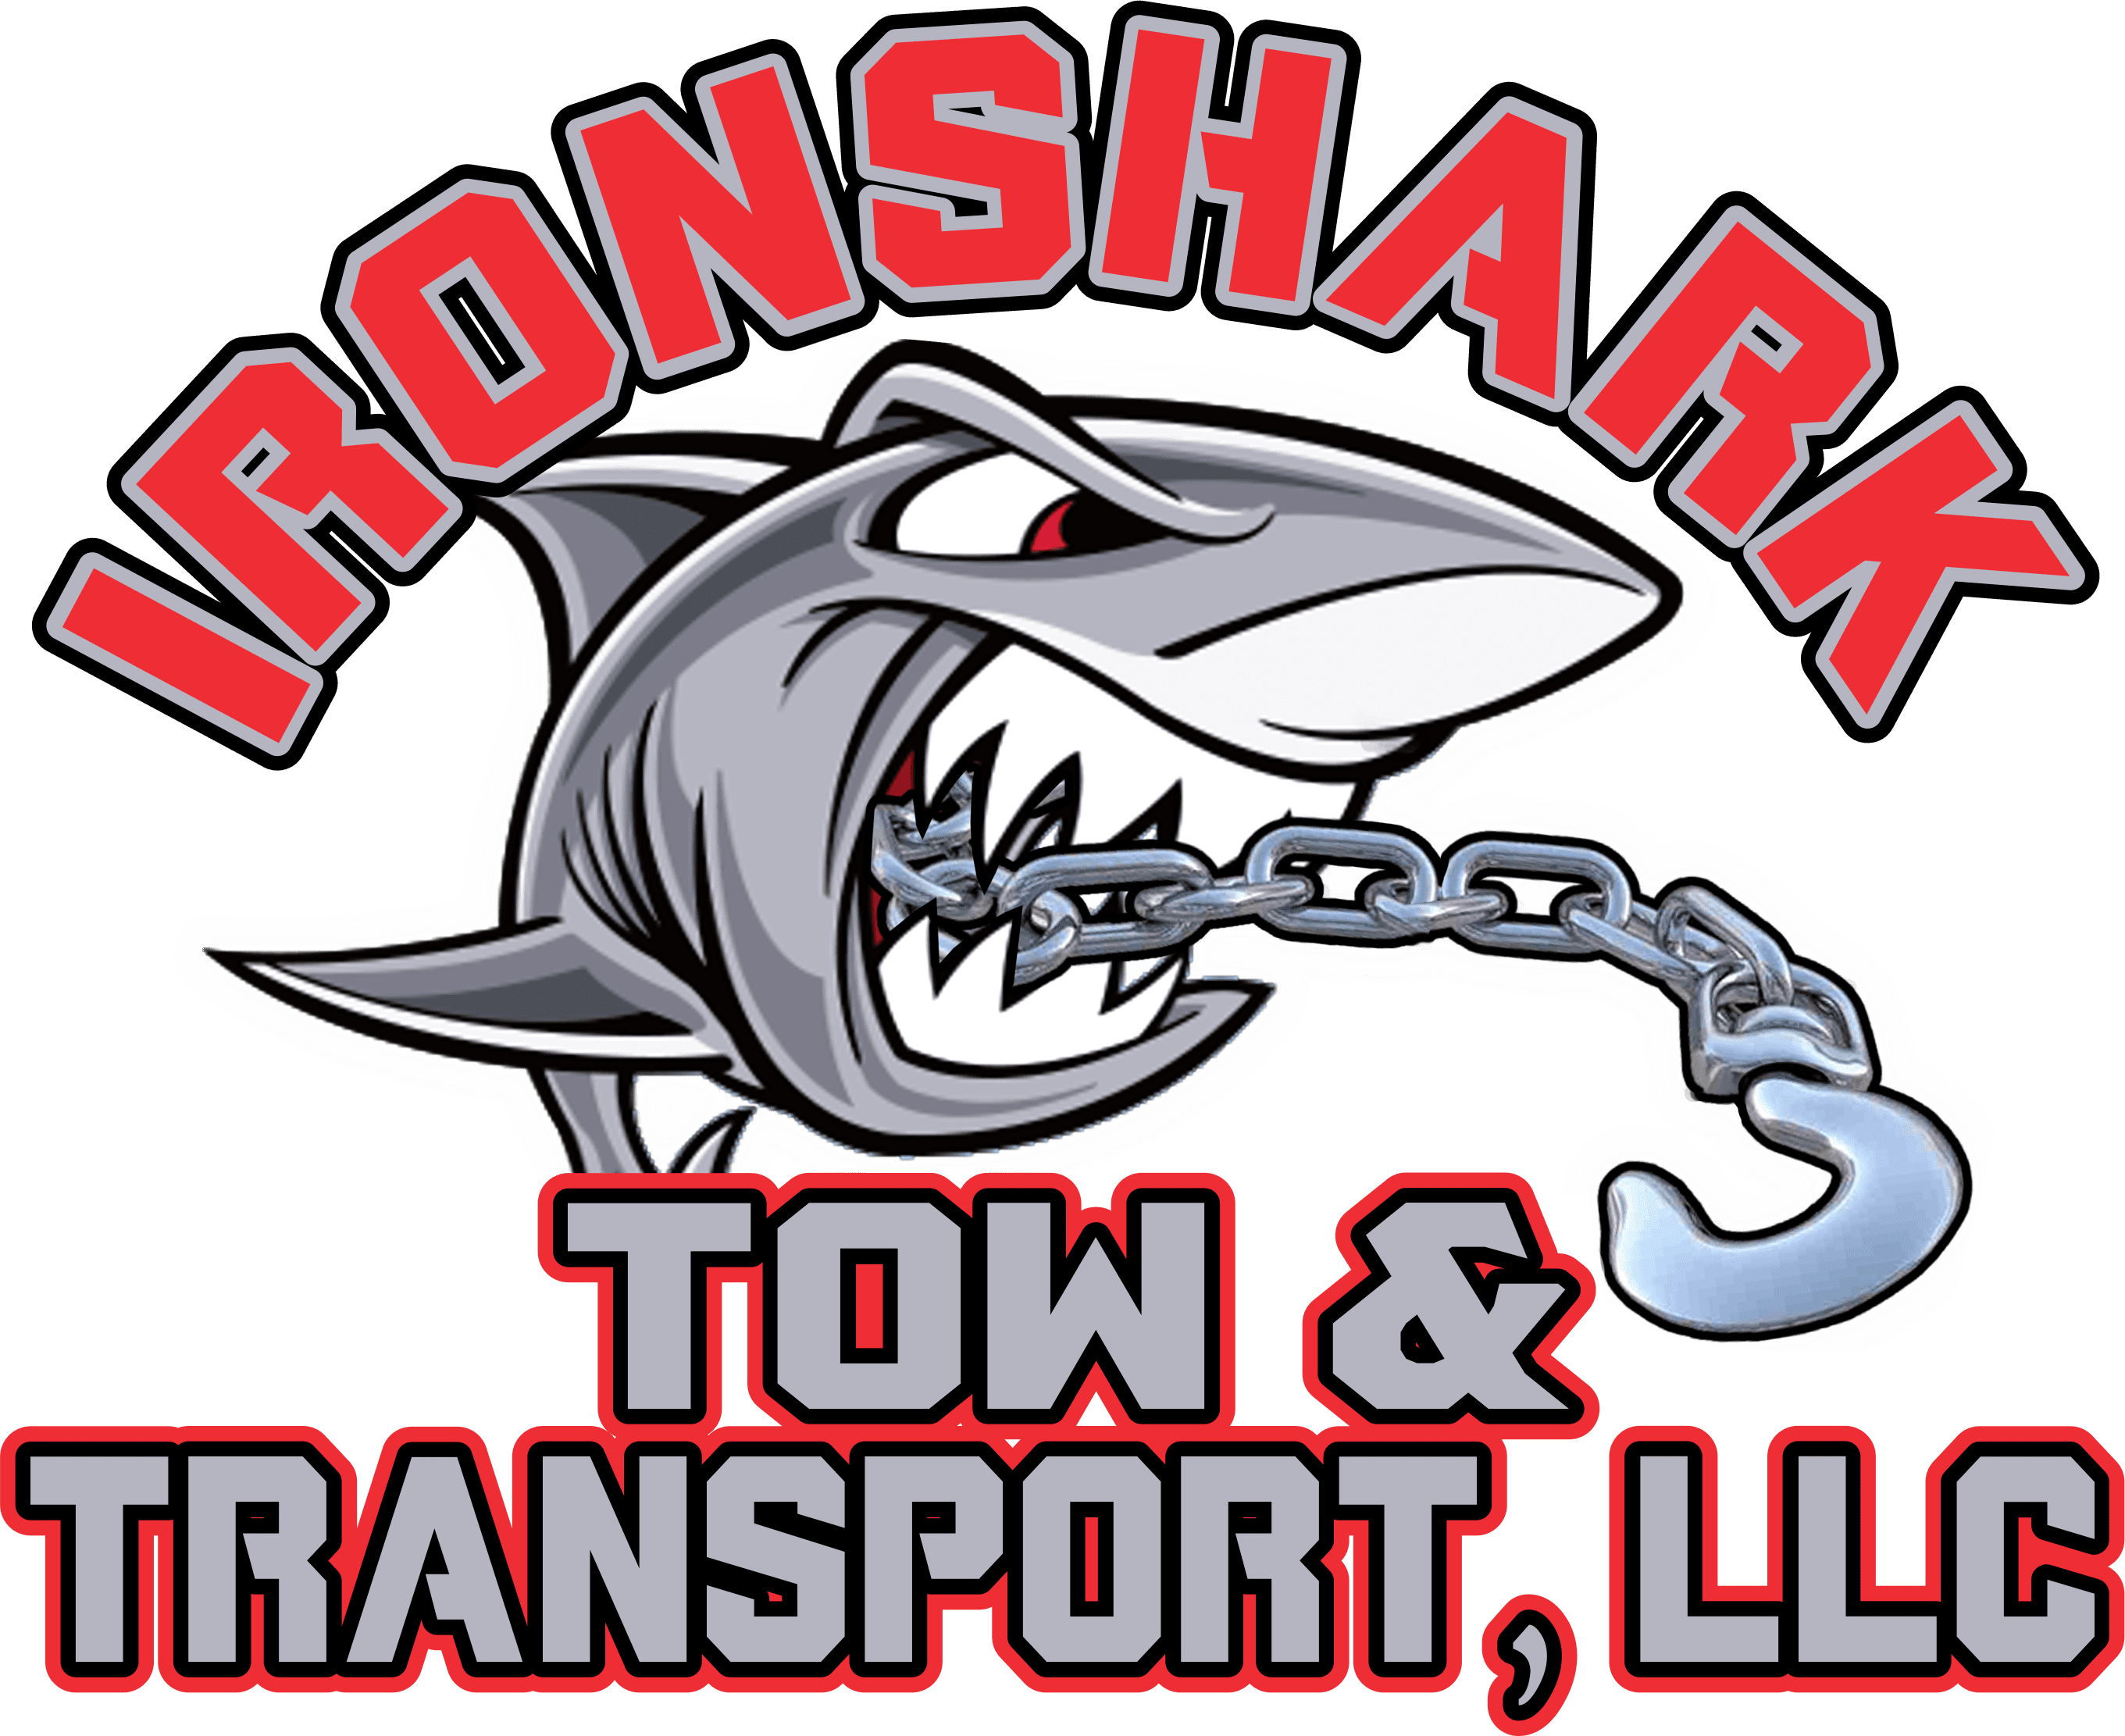 Ironshark Tow & Transport LLC